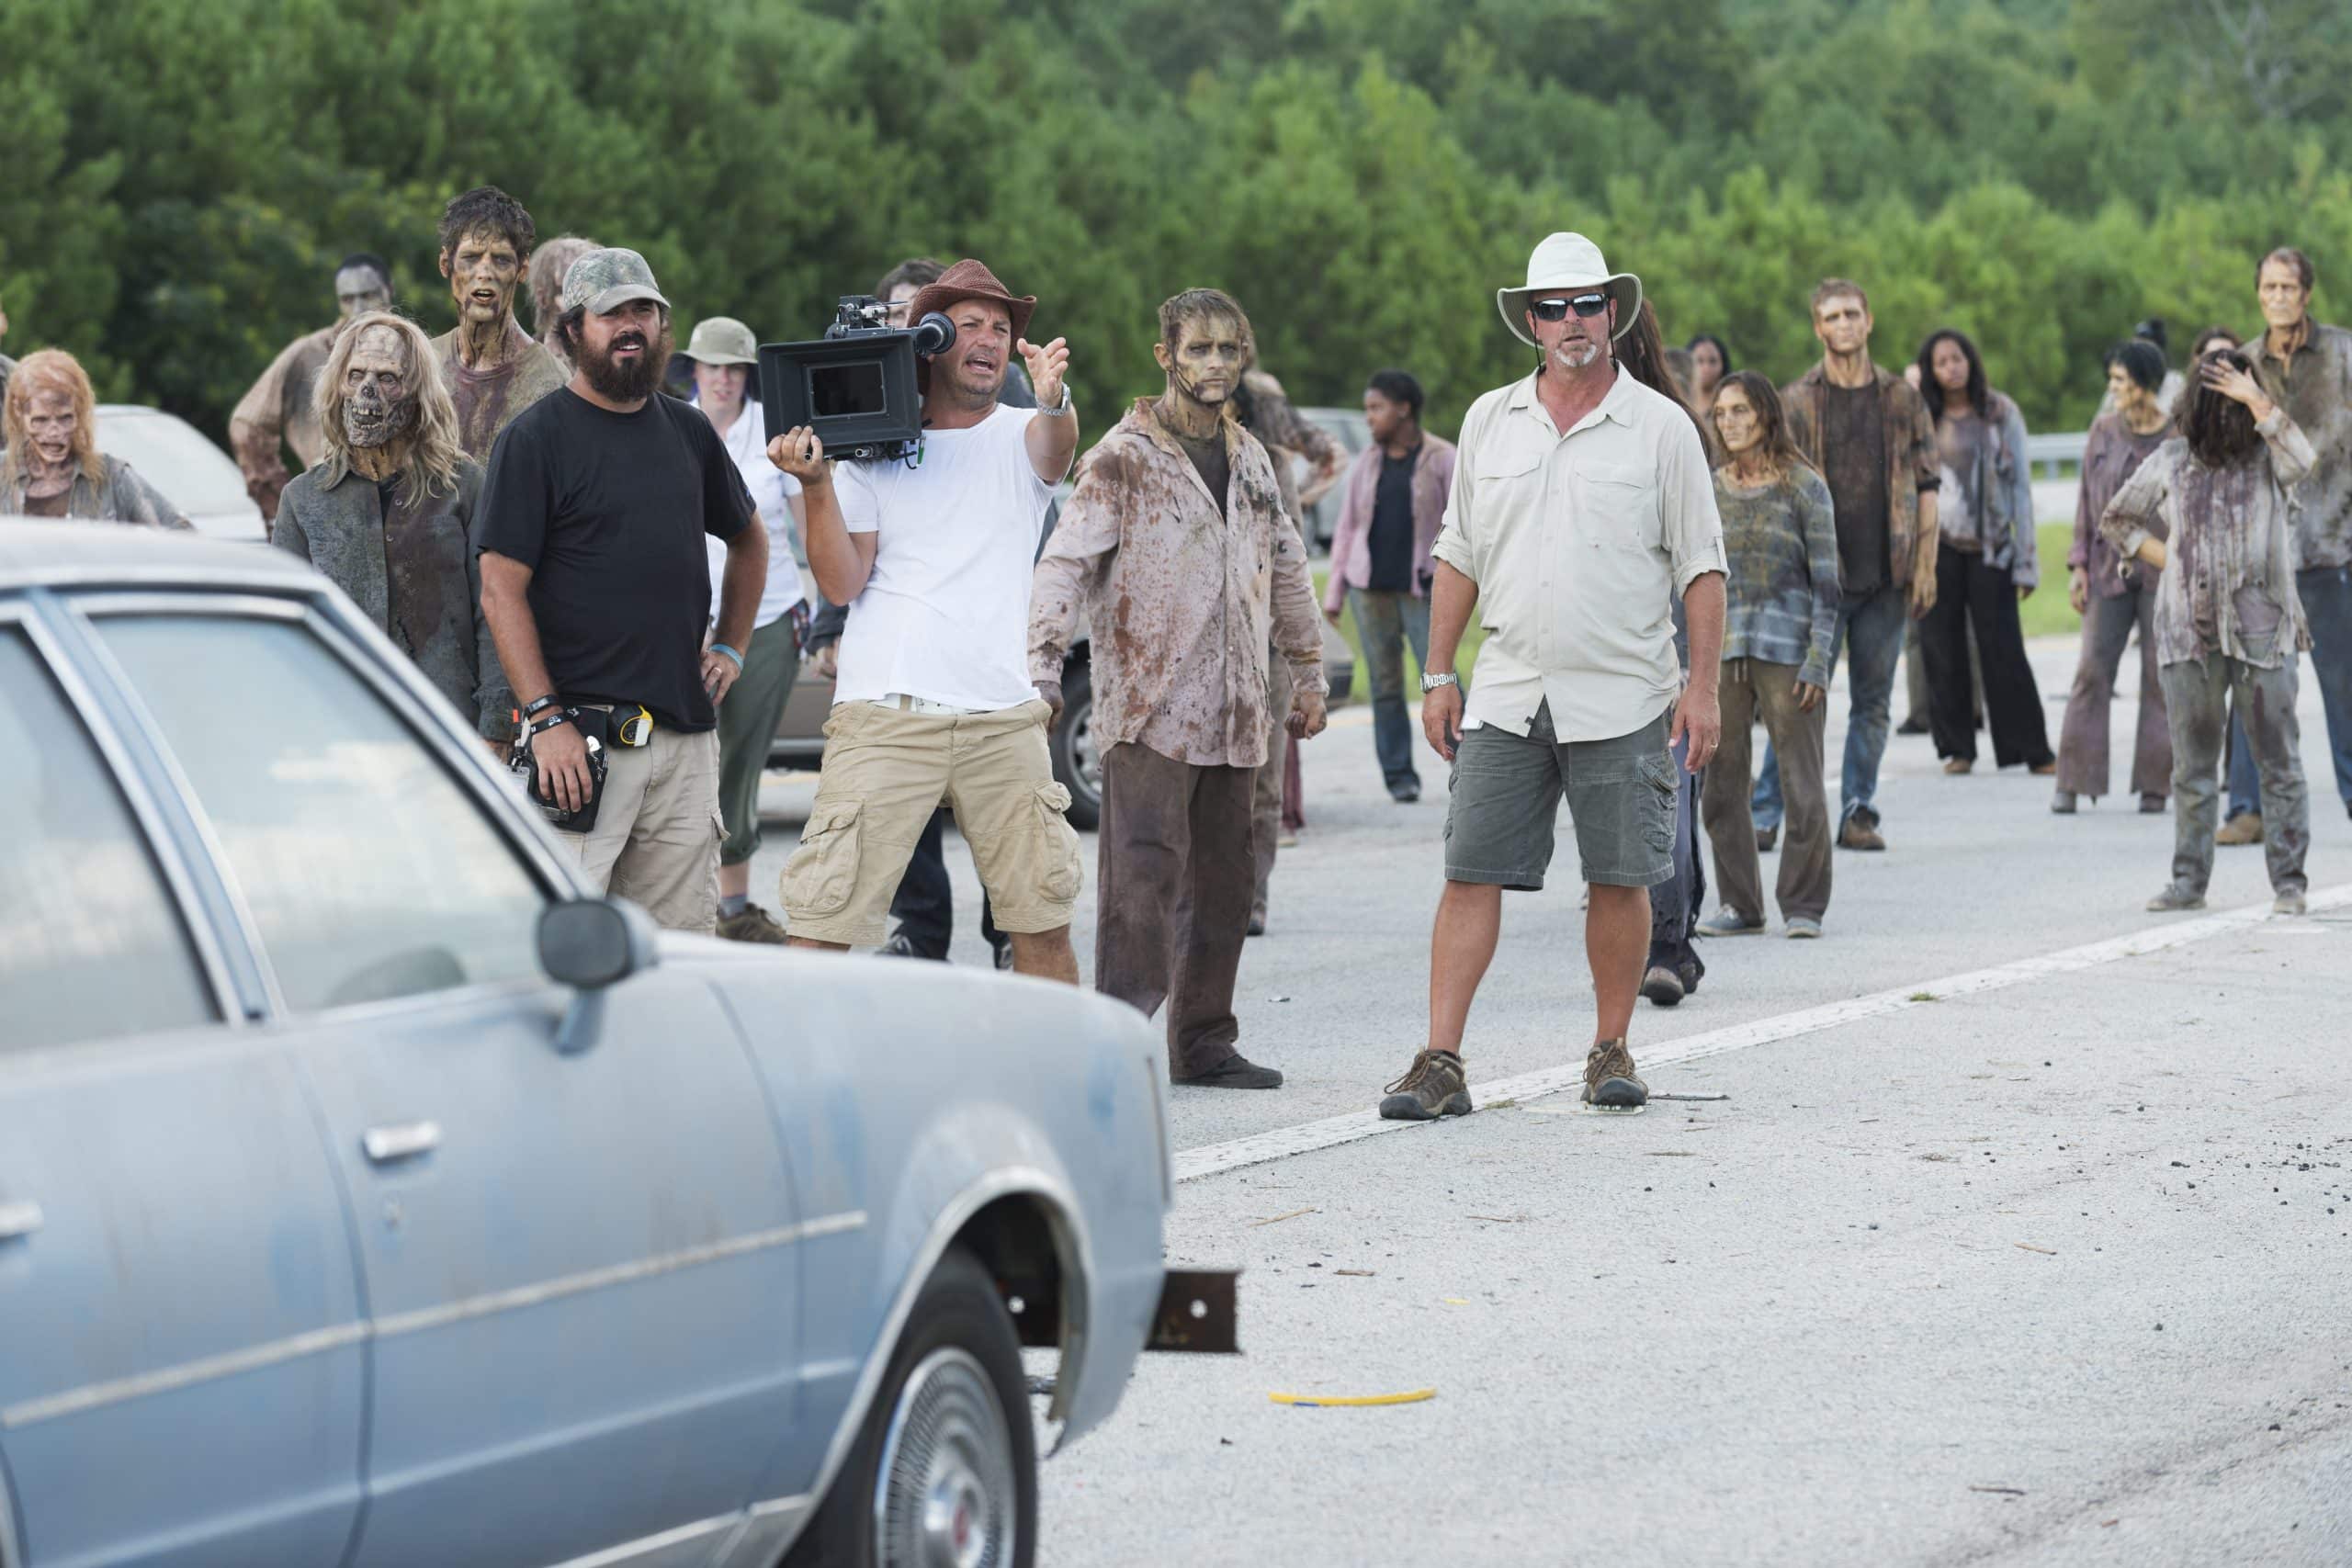 Film Jobs: ‘The Walking Dead’ Director Michael Satrazemis Shoots Zombies With Film